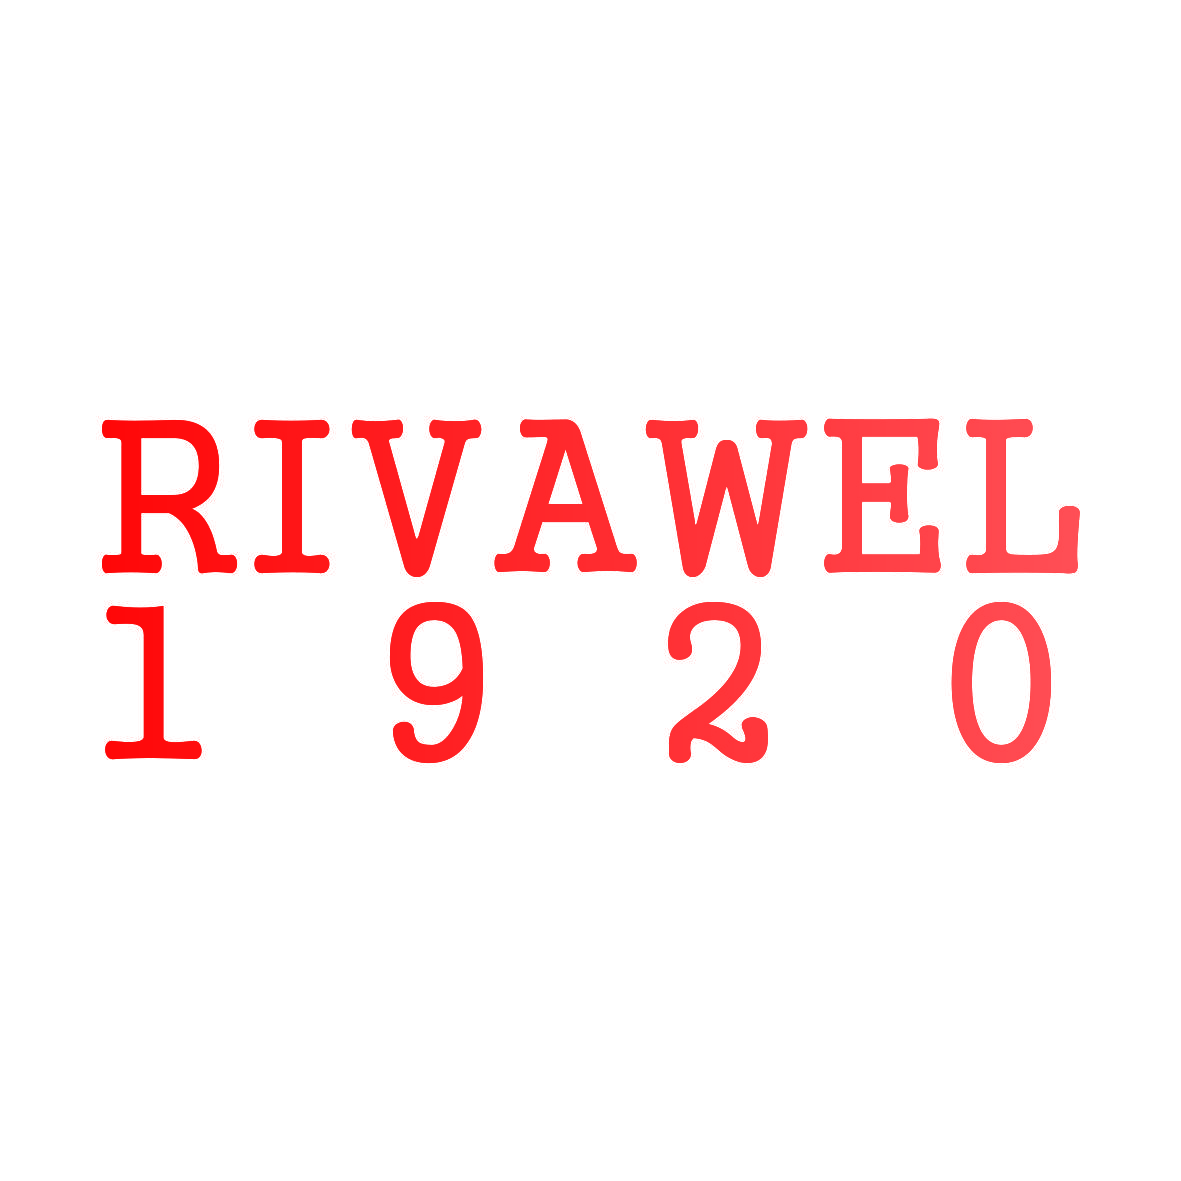 RIVAWEL 1920